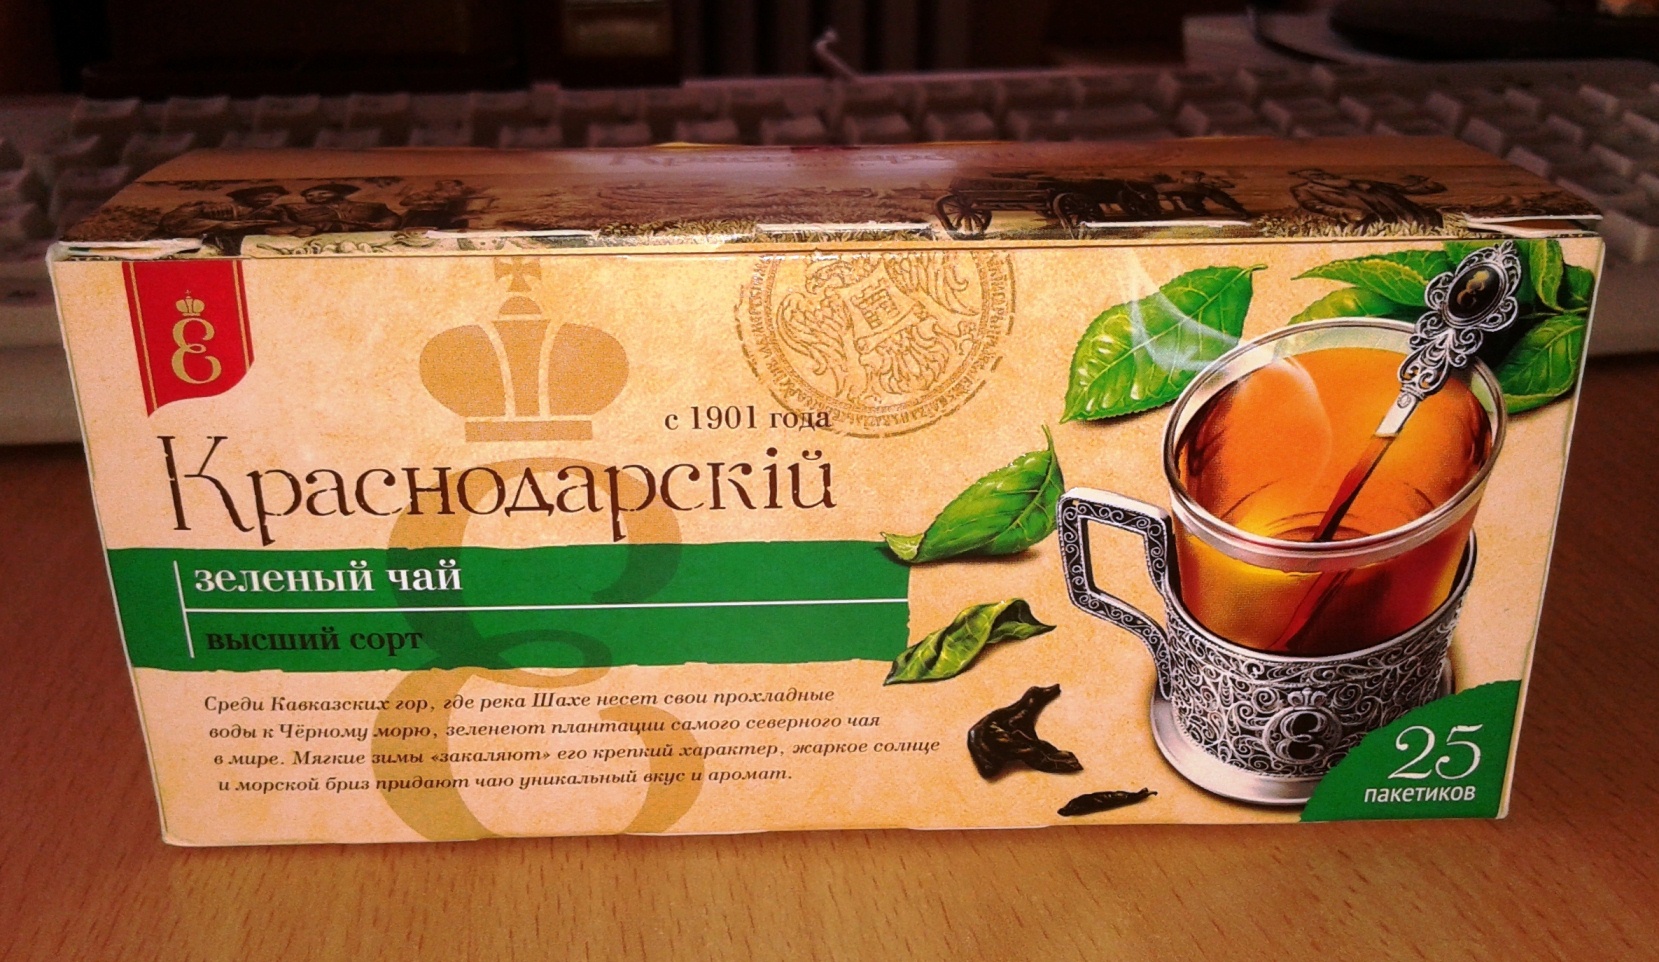 Краснодарский Чай Фото